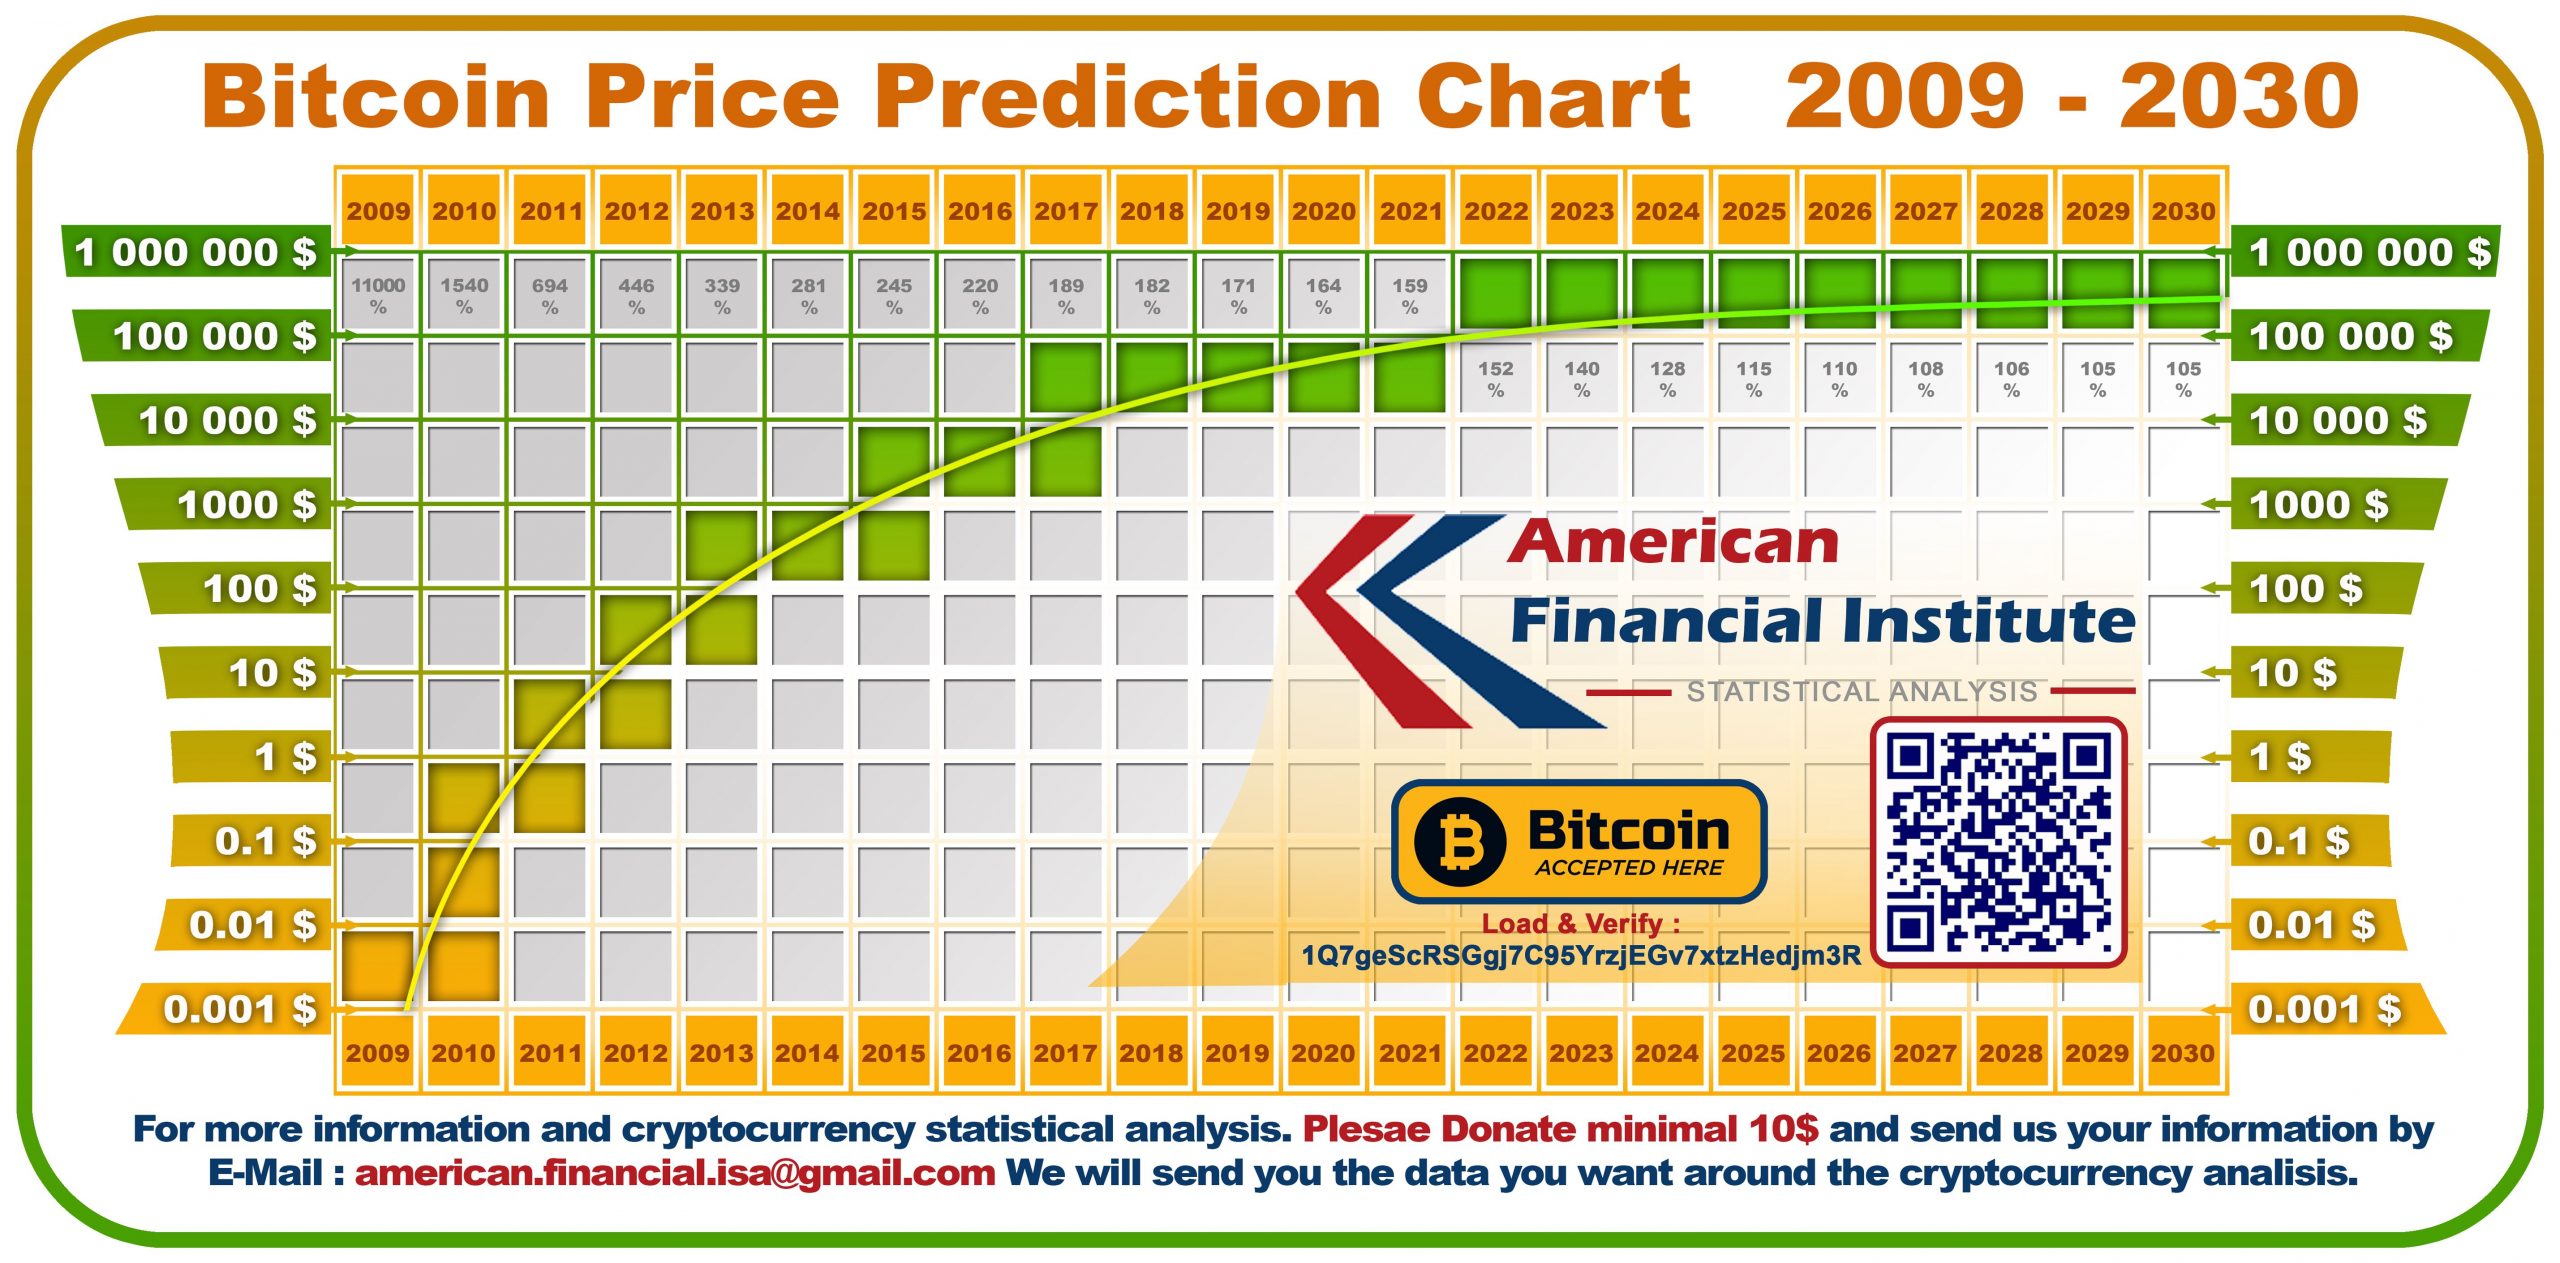 mbl crypto price prediction 2030